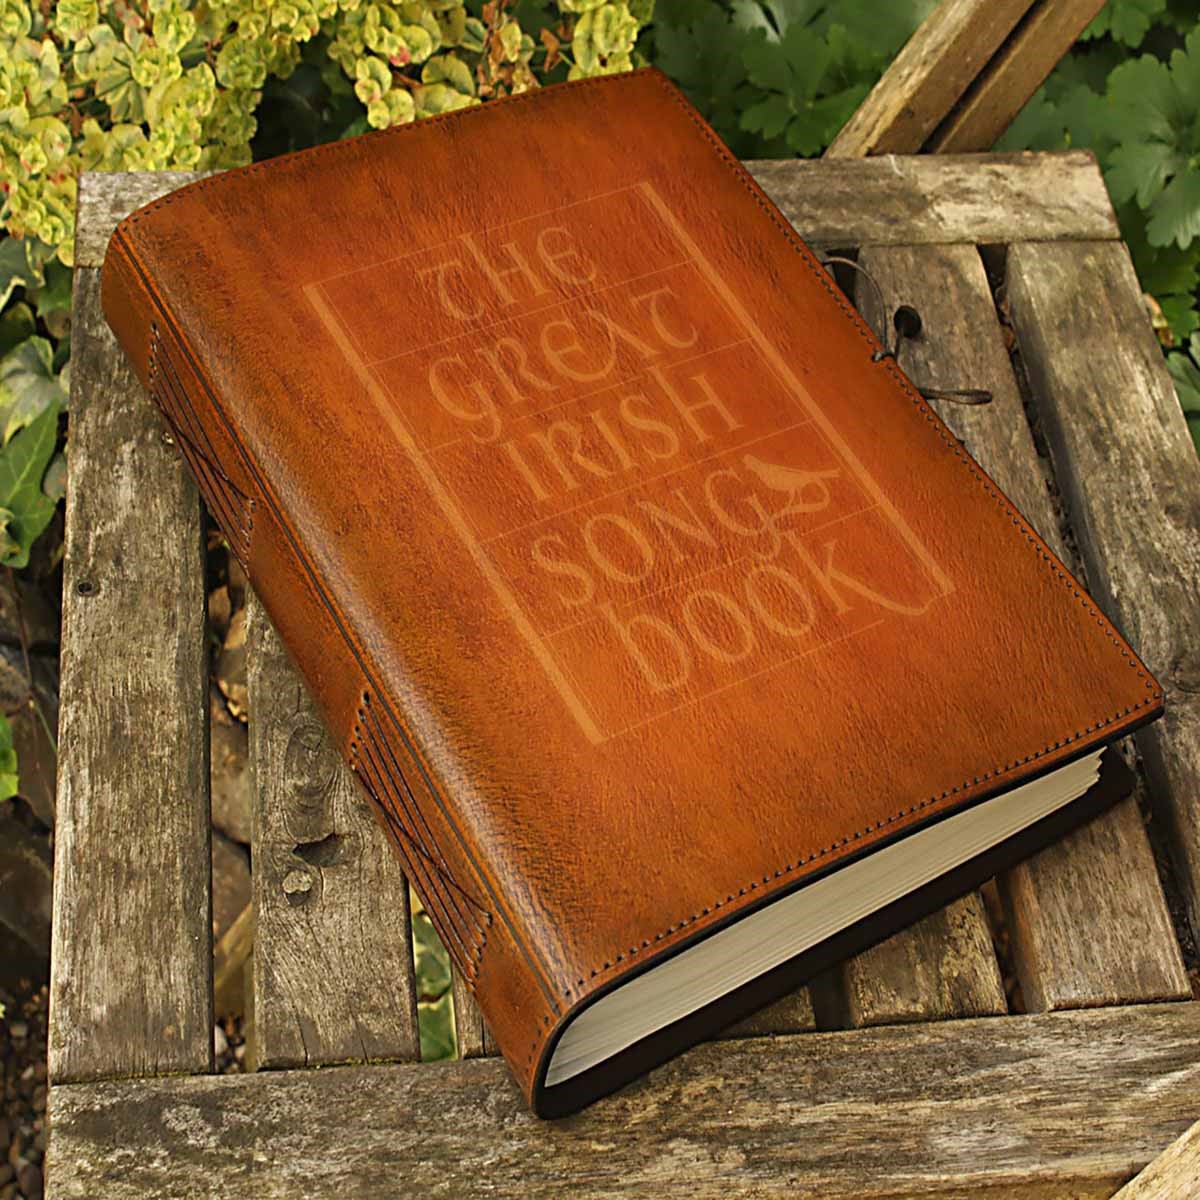 The Great Irish Song Book